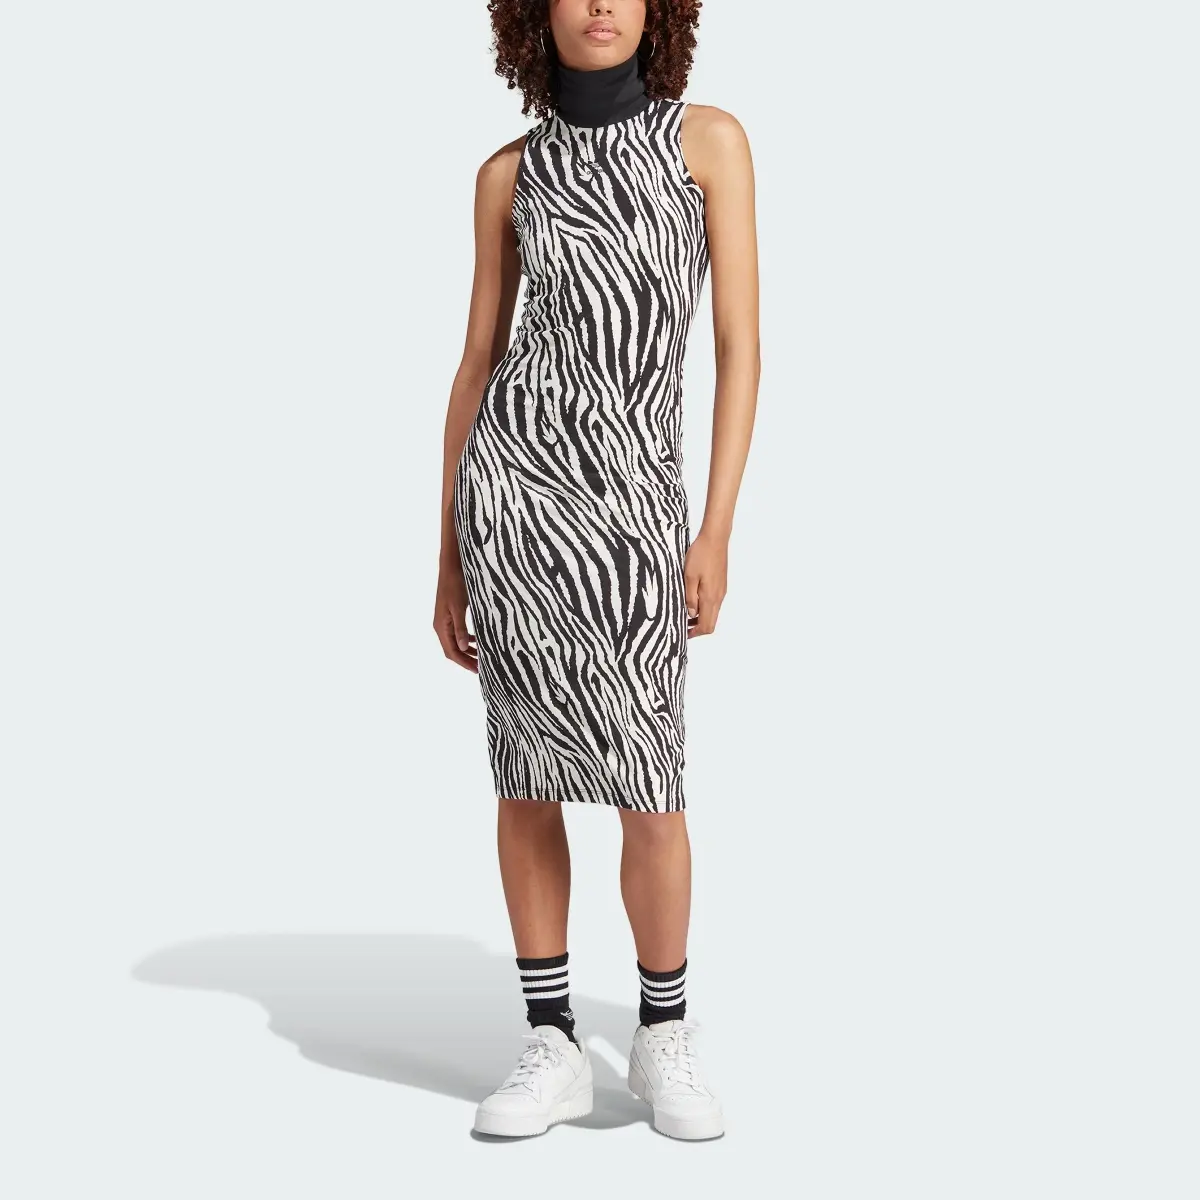 Adidas Allover Zebra Animal Print Dress. 1